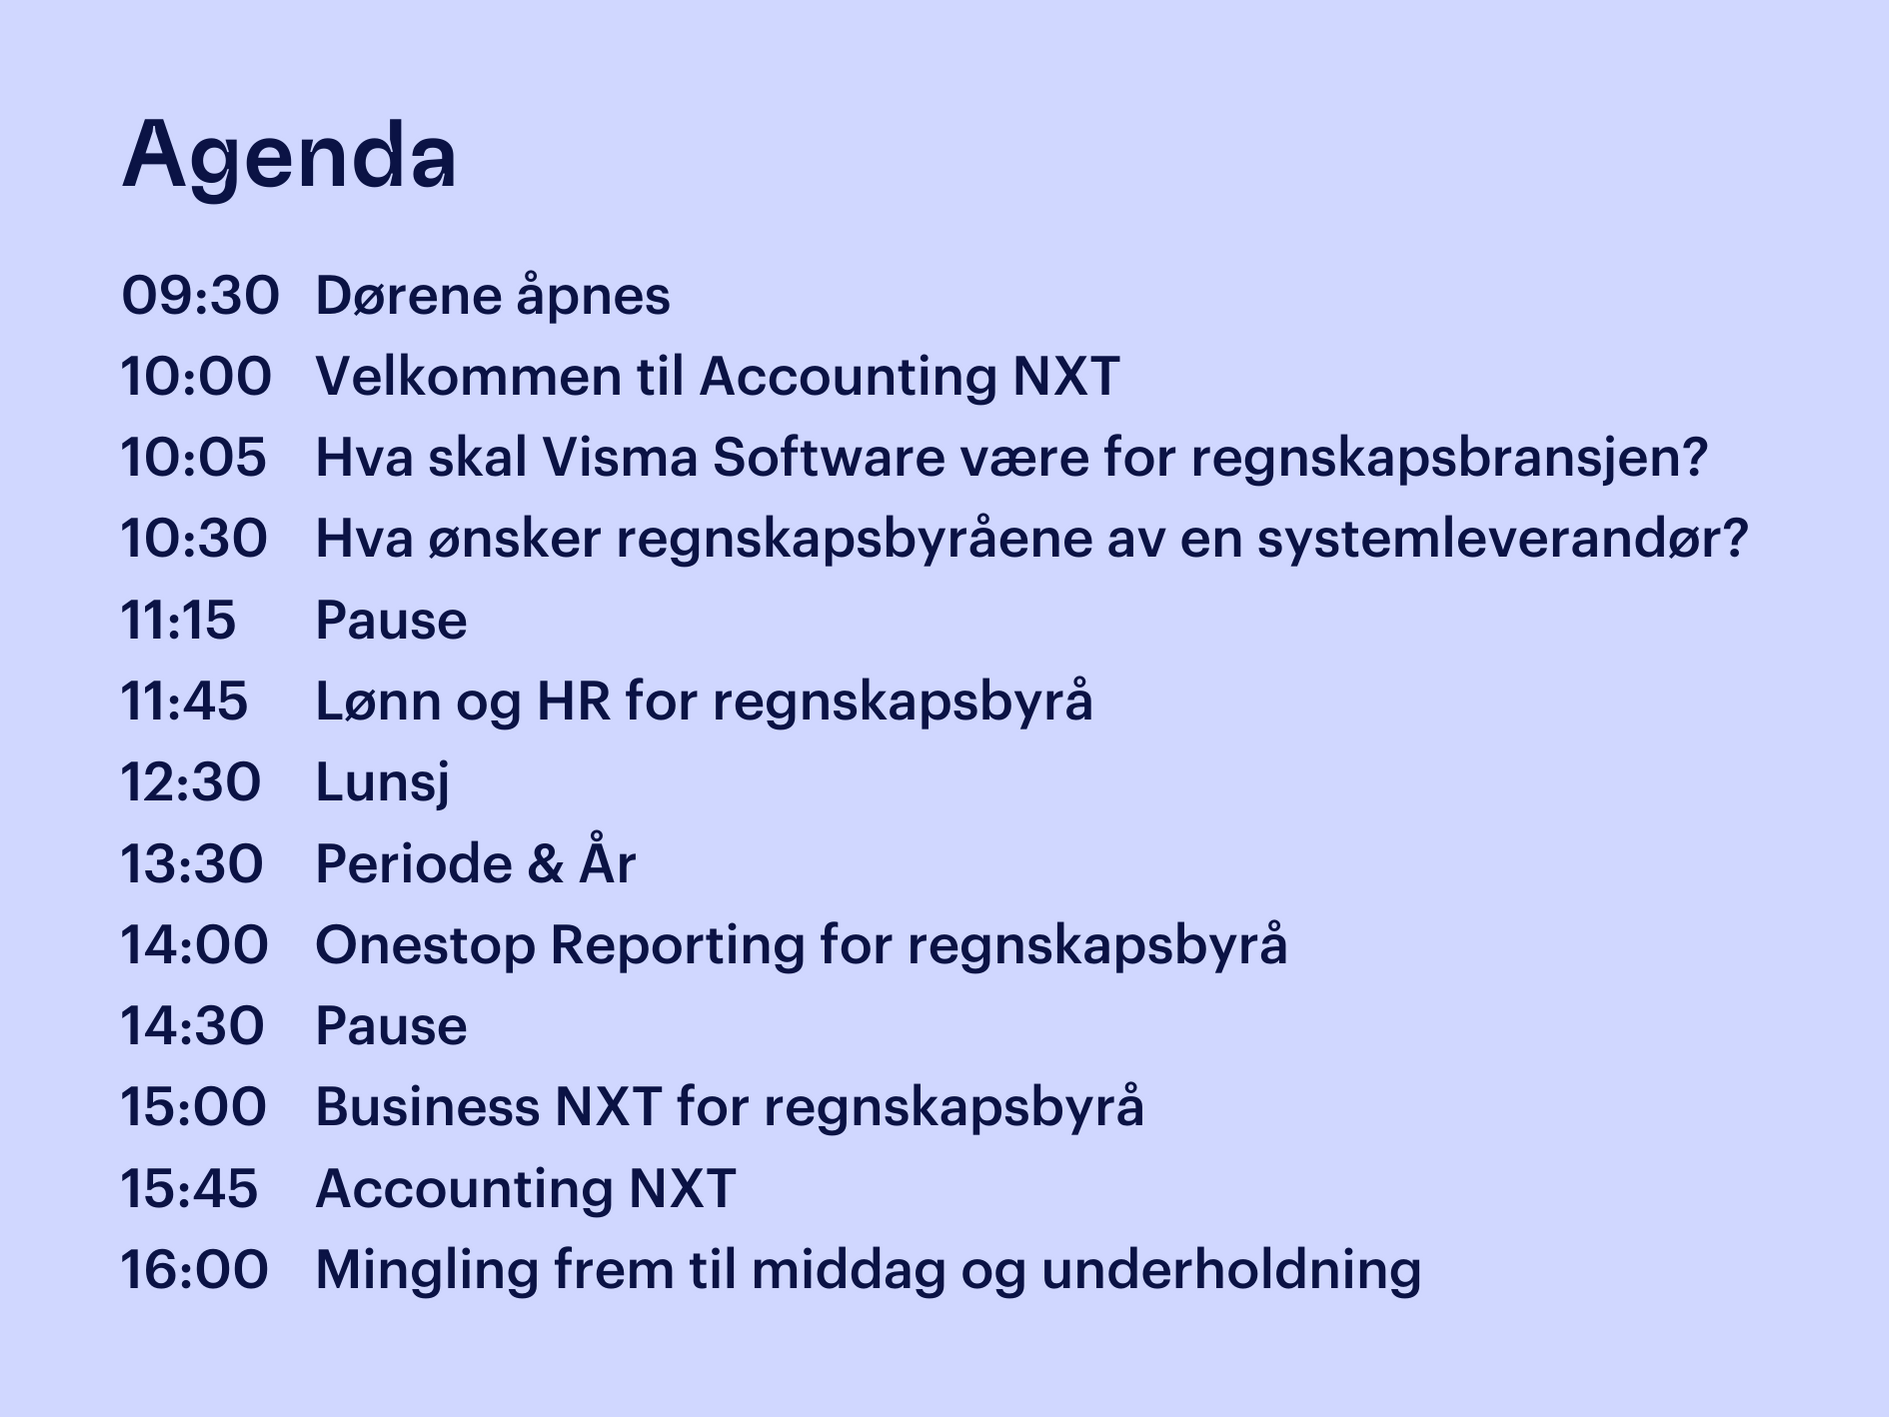 Agenda Accounting NXT